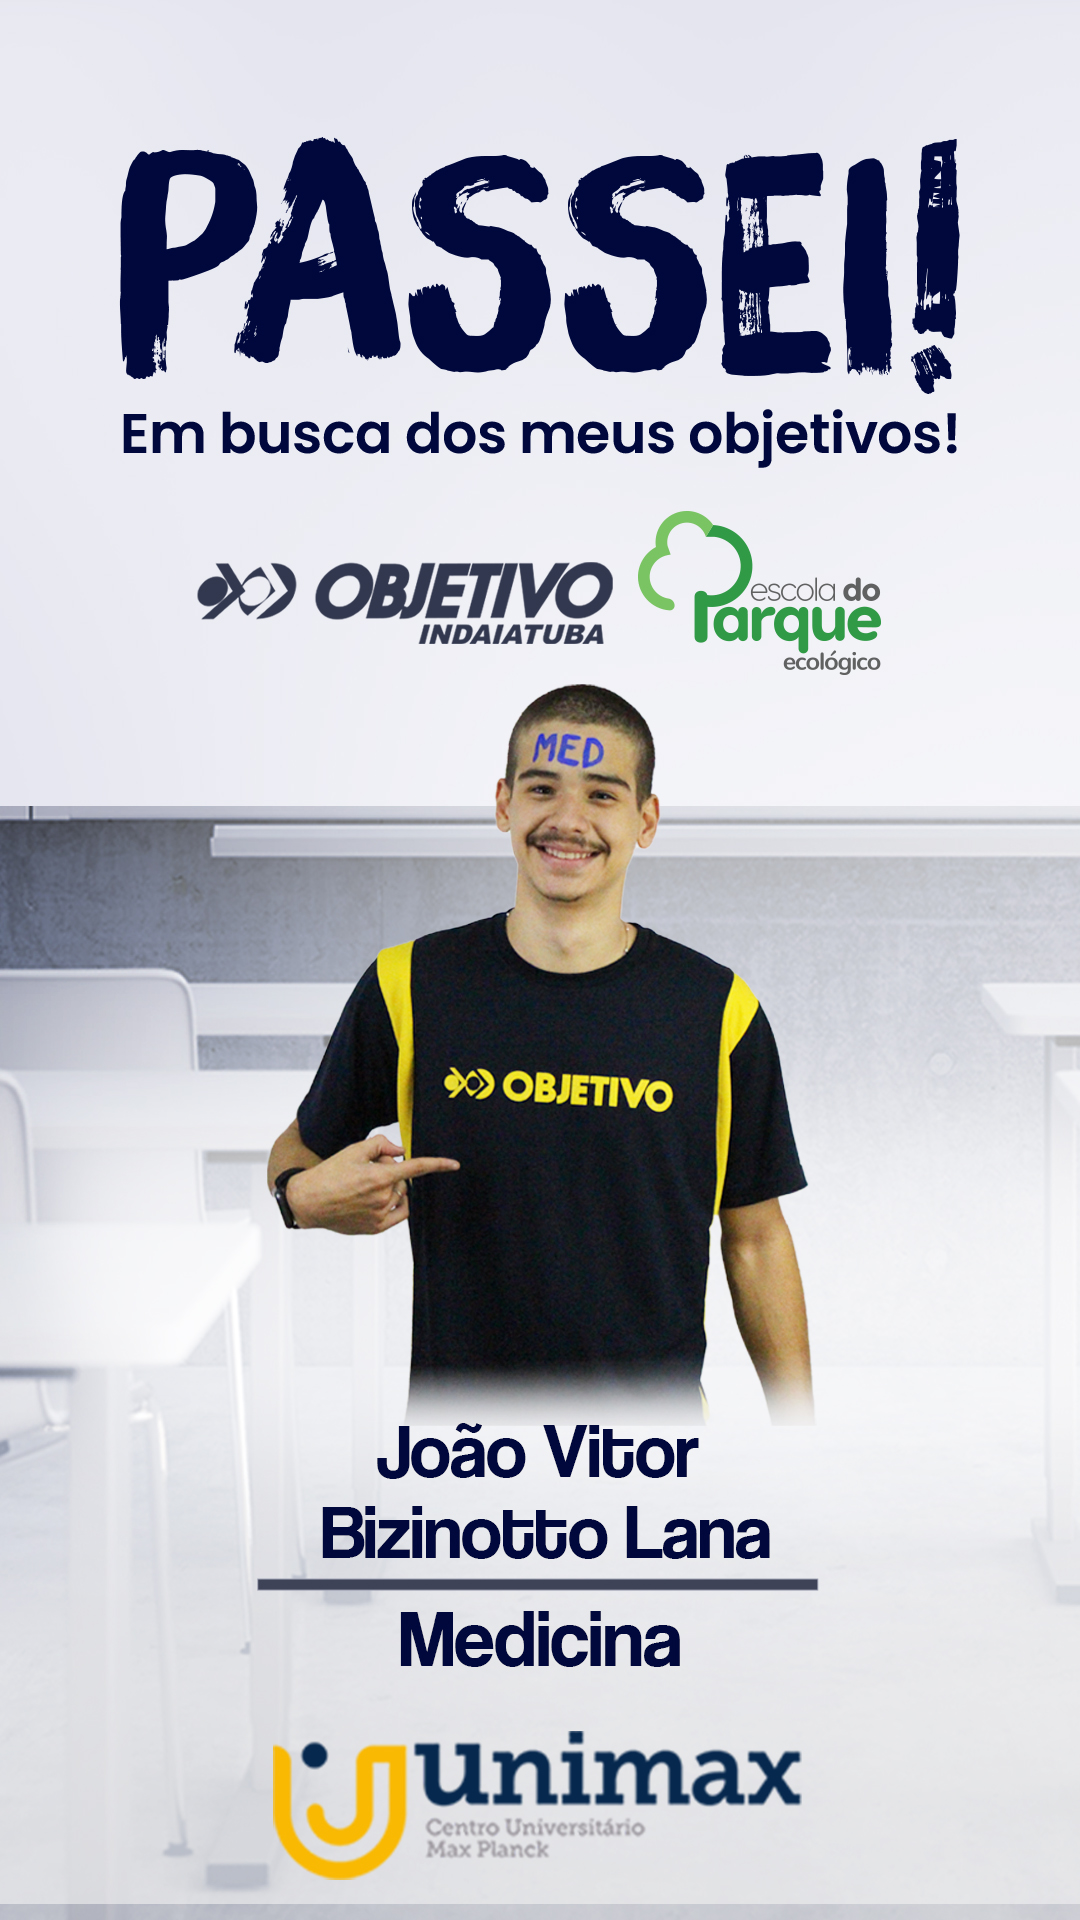 João Vitor Bizinotto Lana